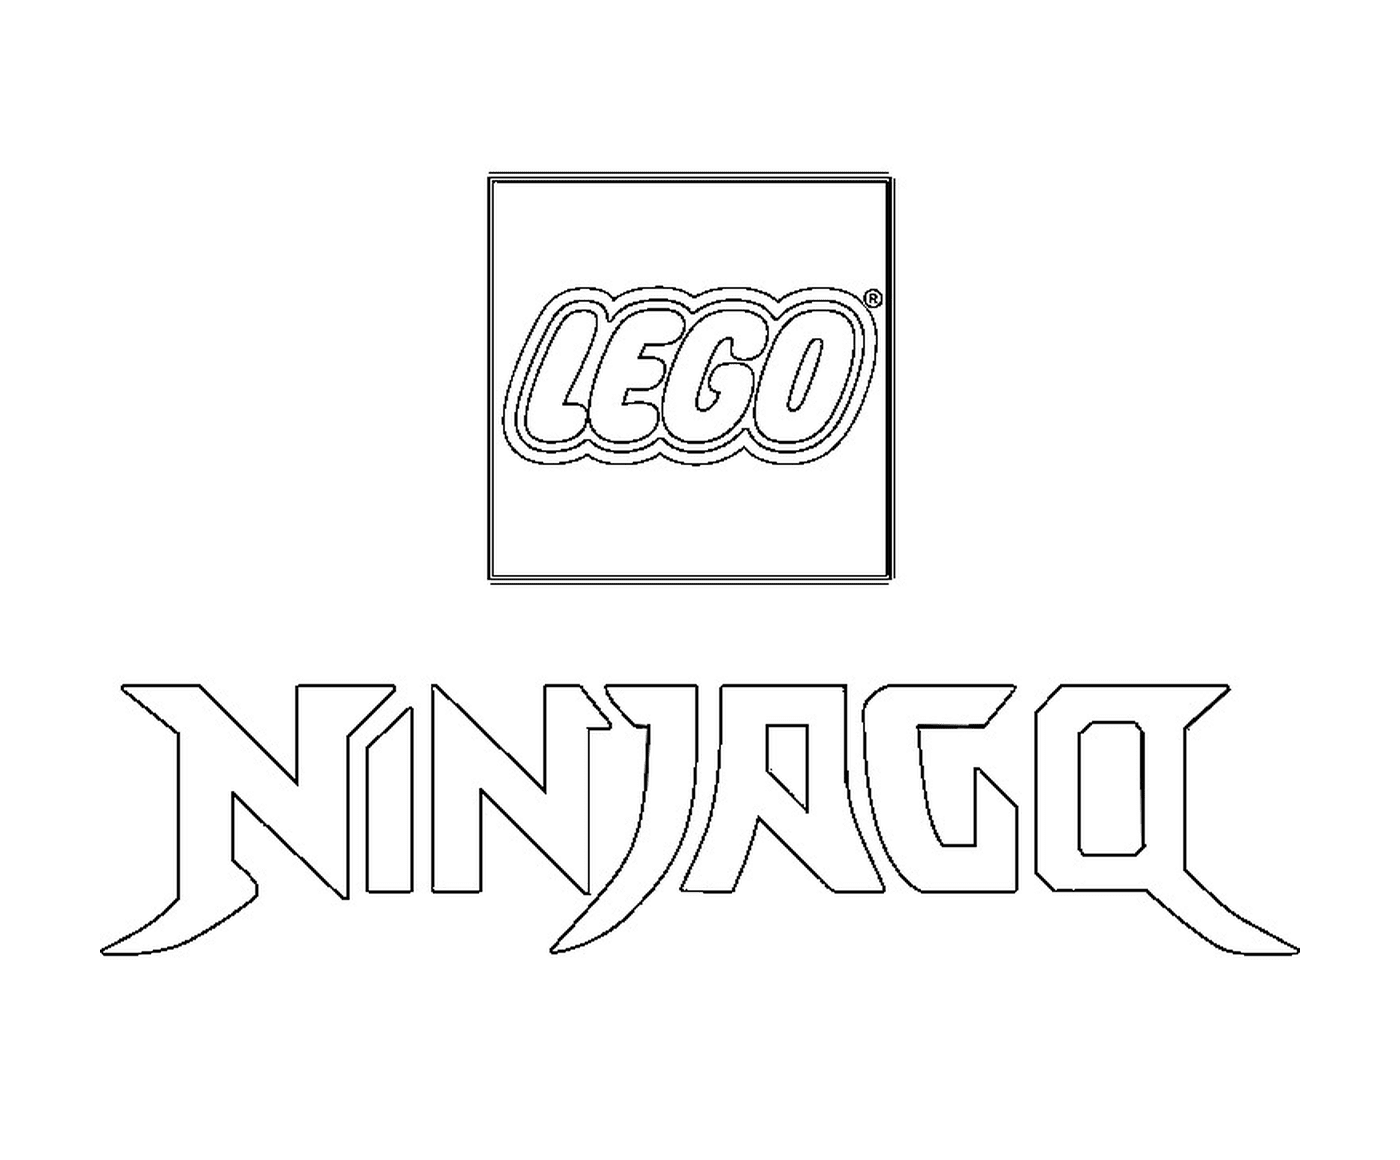  Ninjago logo 